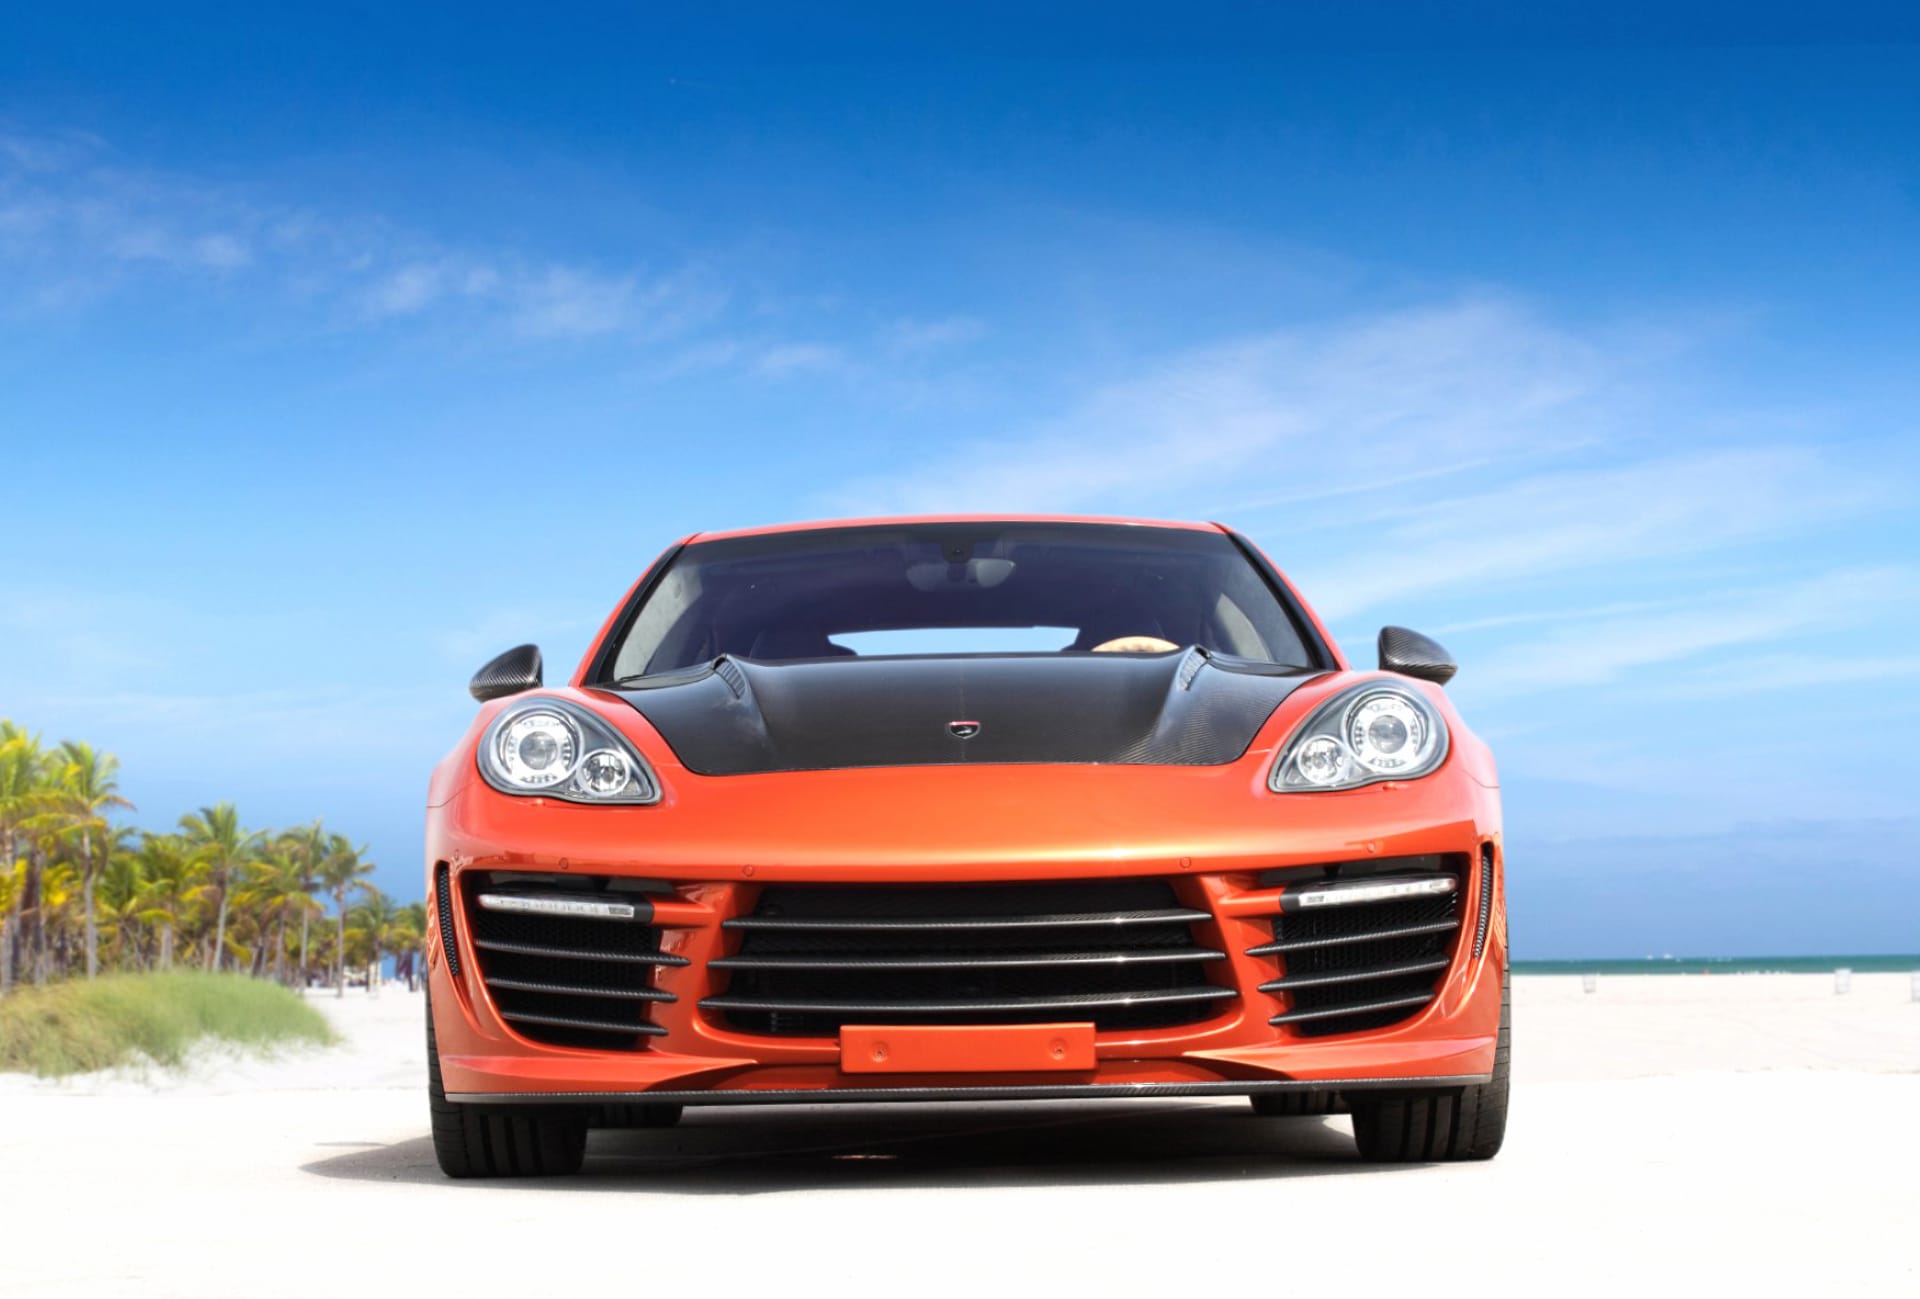 Porsche Panamera Stingray GTR at 2048 x 2048 iPad size wallpapers HD quality